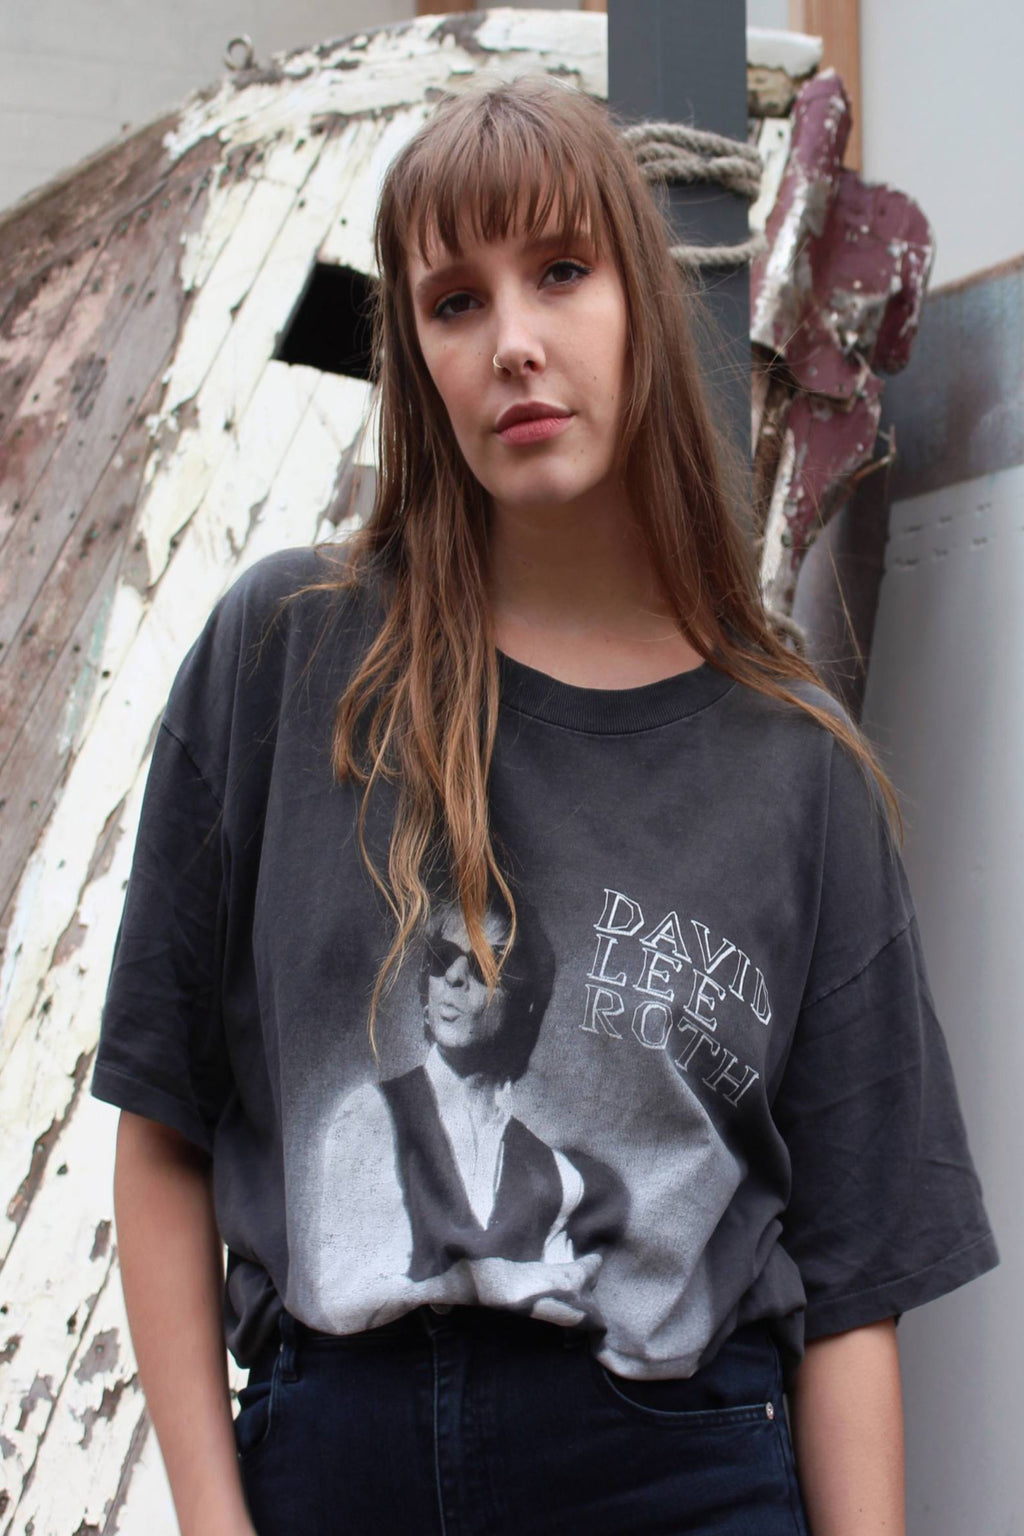 Grunge Print Tshirt - Mens Festival Clothes - Soft Graphic T-Shirt - 90s Grunge Tshirt - Concert Tees Vintage - David Lee Roth T-shirt